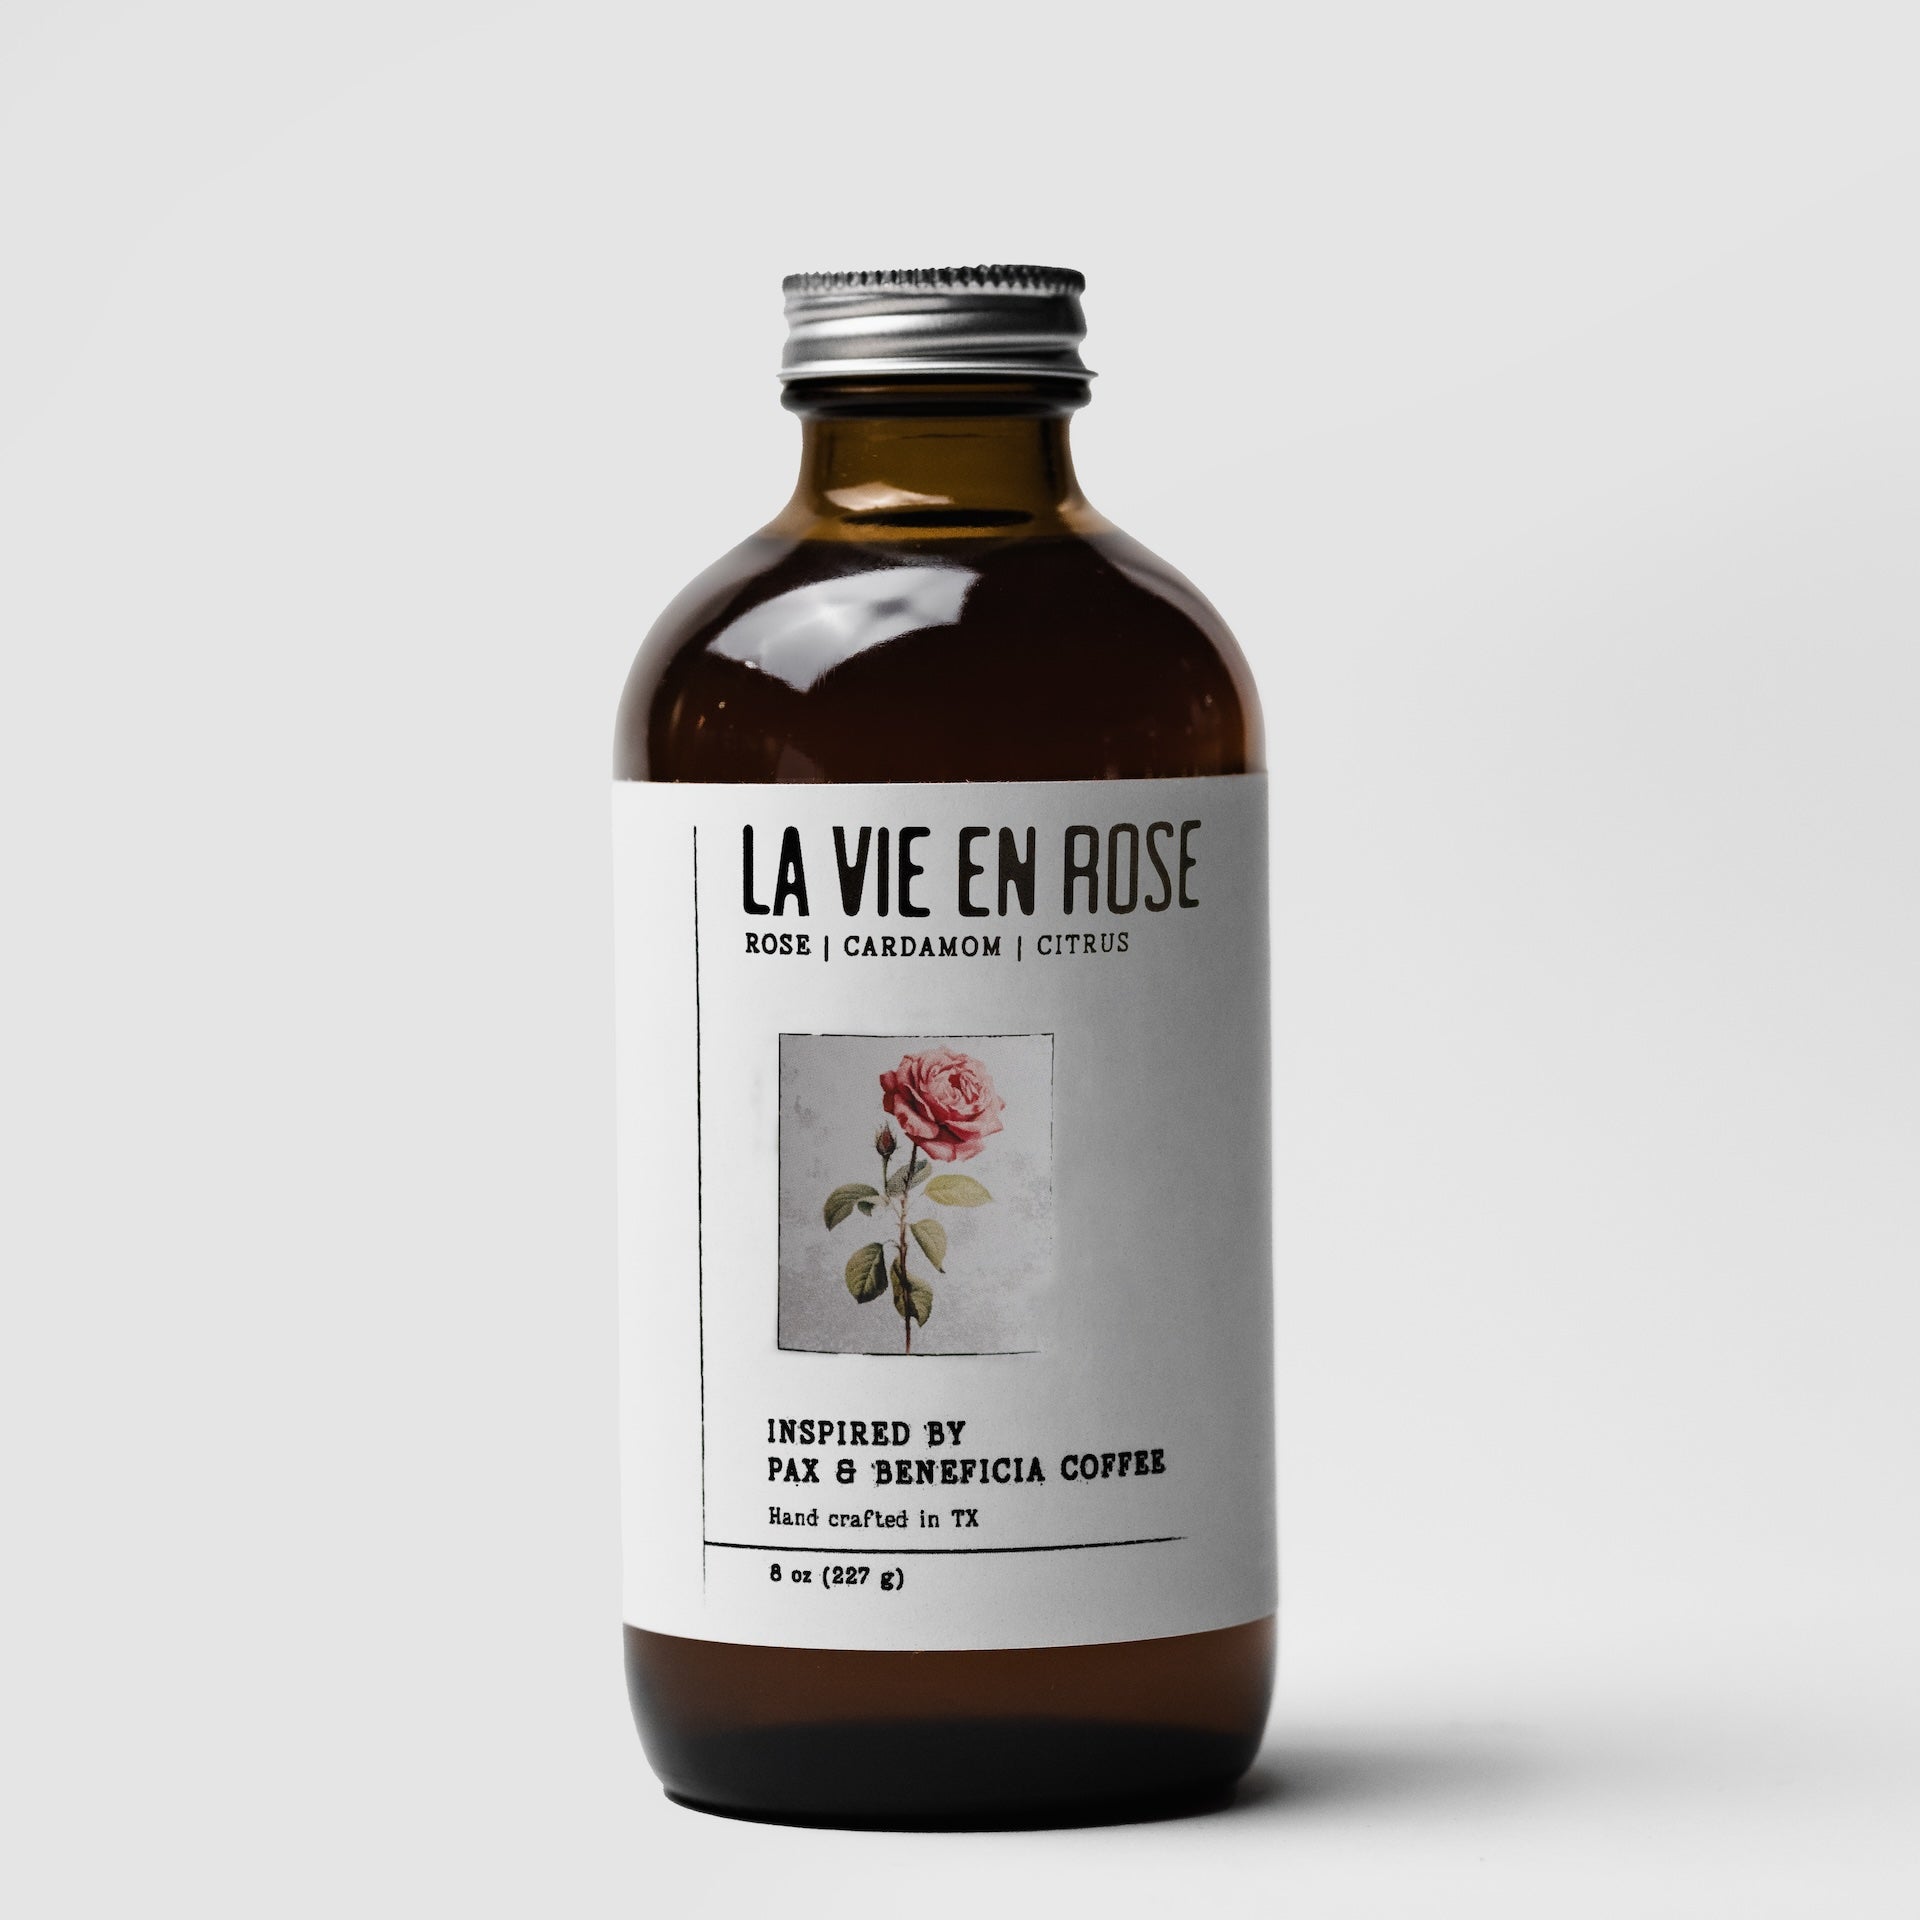 Shop For Genuine La Vie En Rose Products At Best Offers